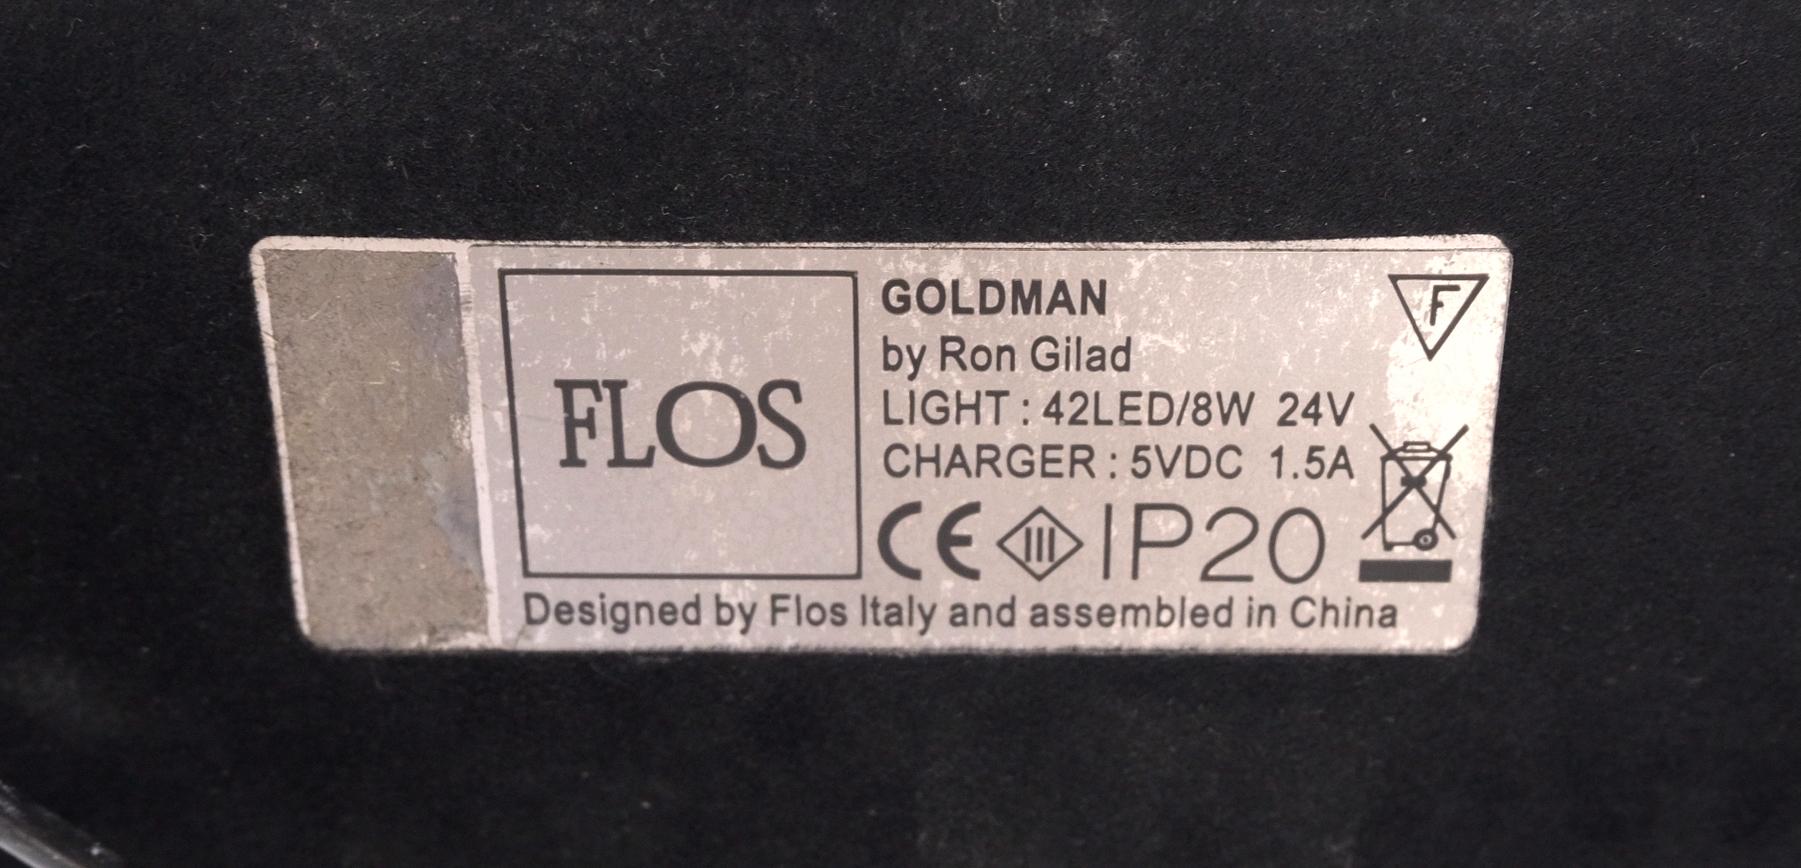 Pair of Floss Goldman Table Lamps Emerald Green Glass Shades Brass  5